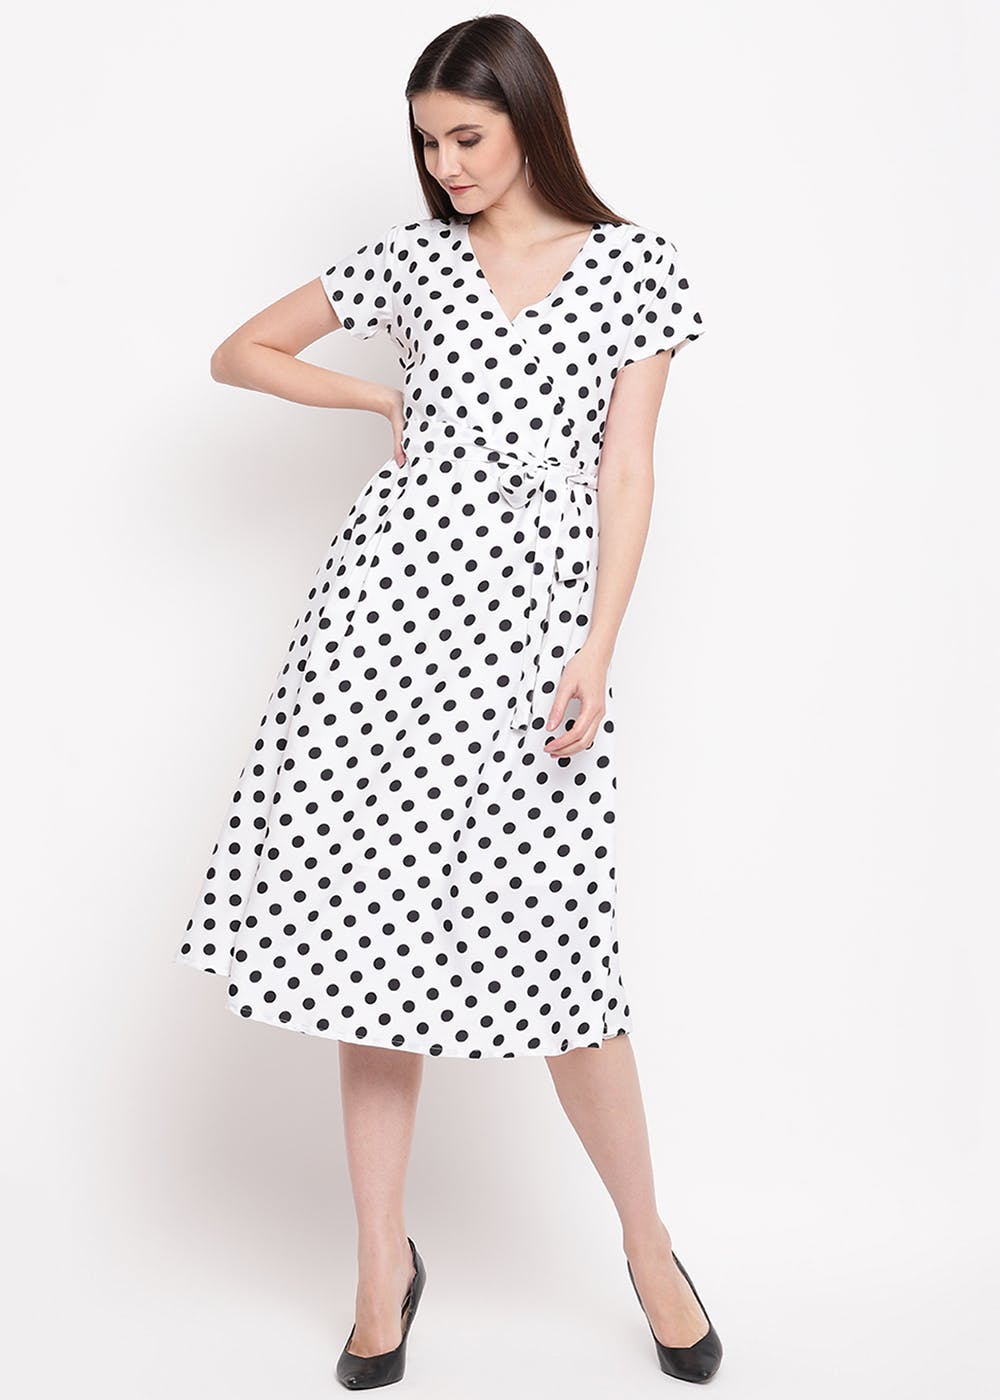 Get Wrap Neck Detail Polka Dotted Dress at ₹ 899 | LBB Shop